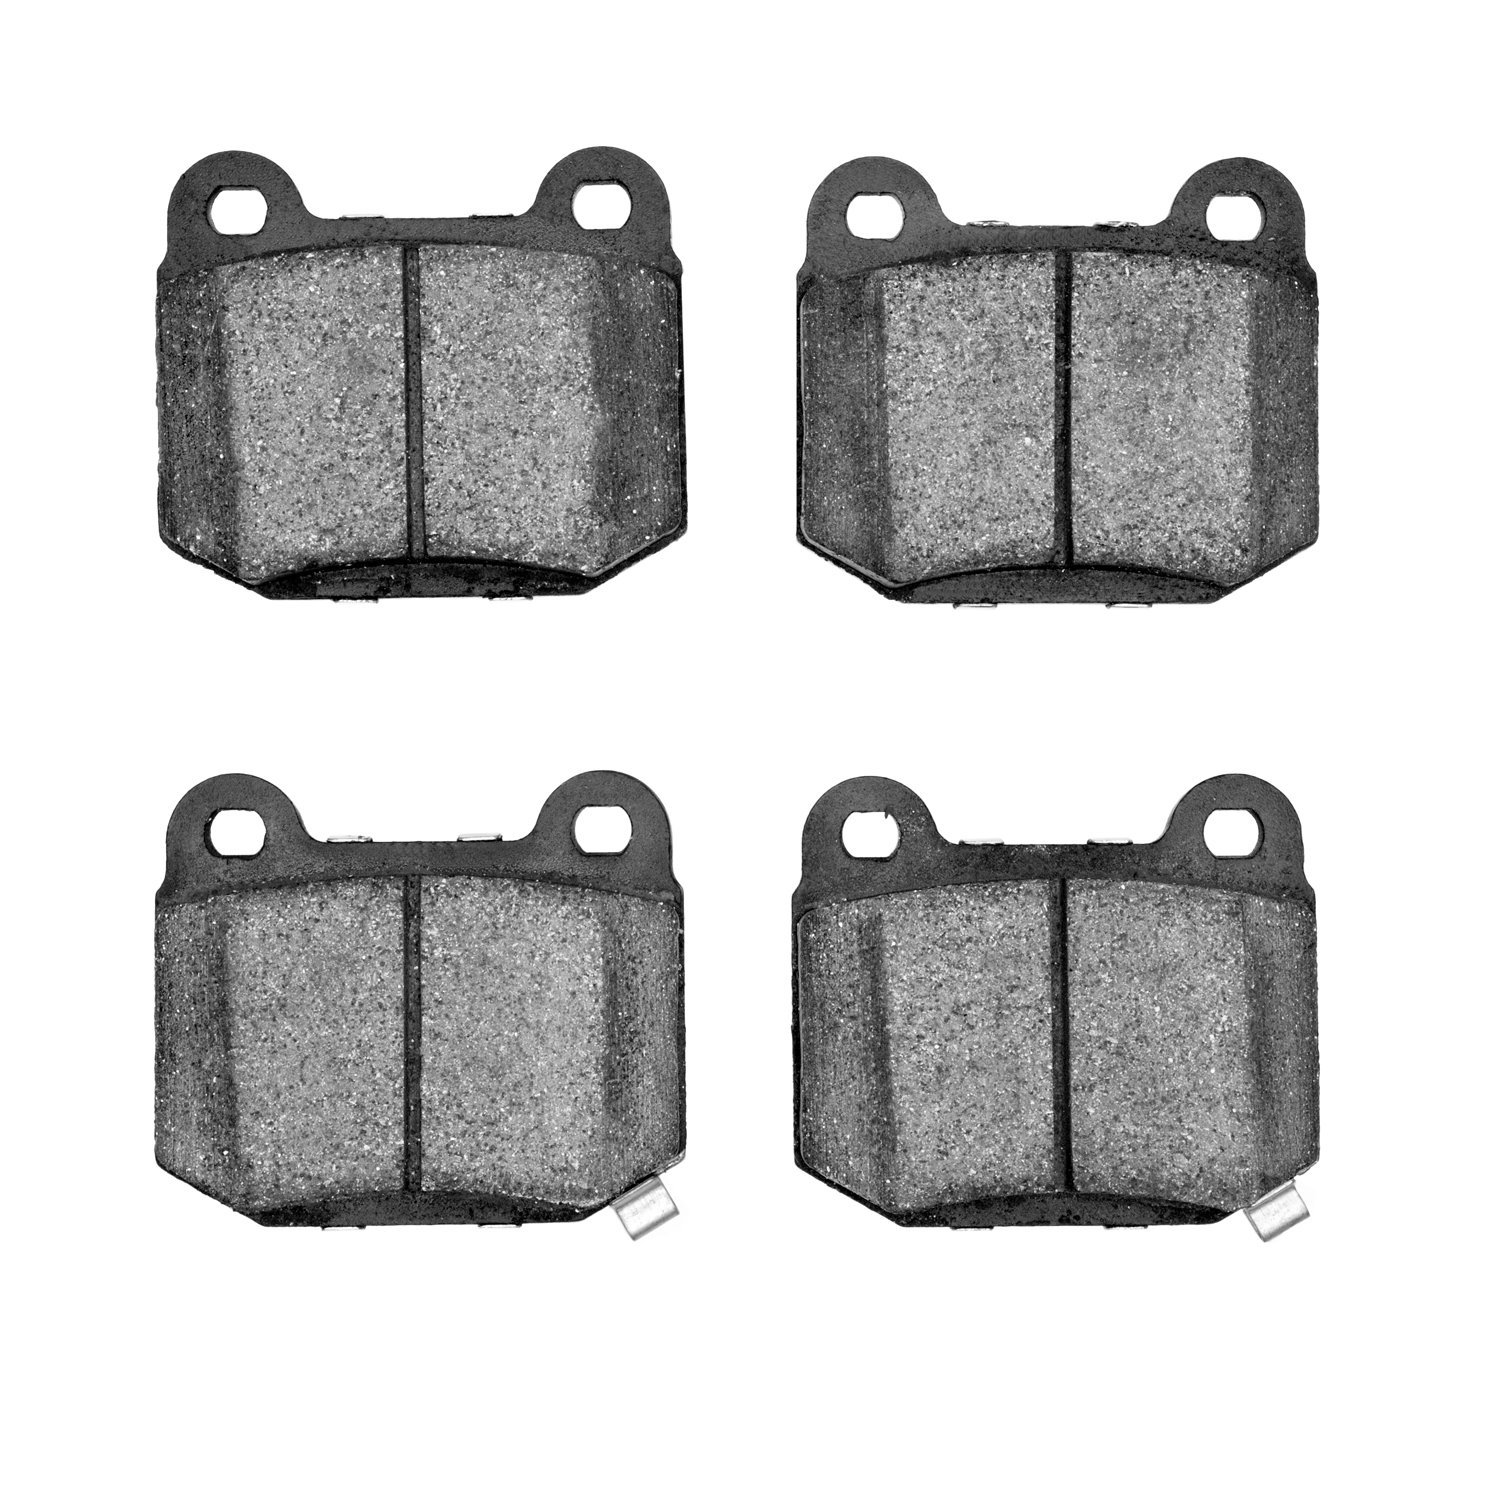 Semi-Metallic Brake Pads, 2003-2020 Fits Multiple Makes/Models, Position: Rear